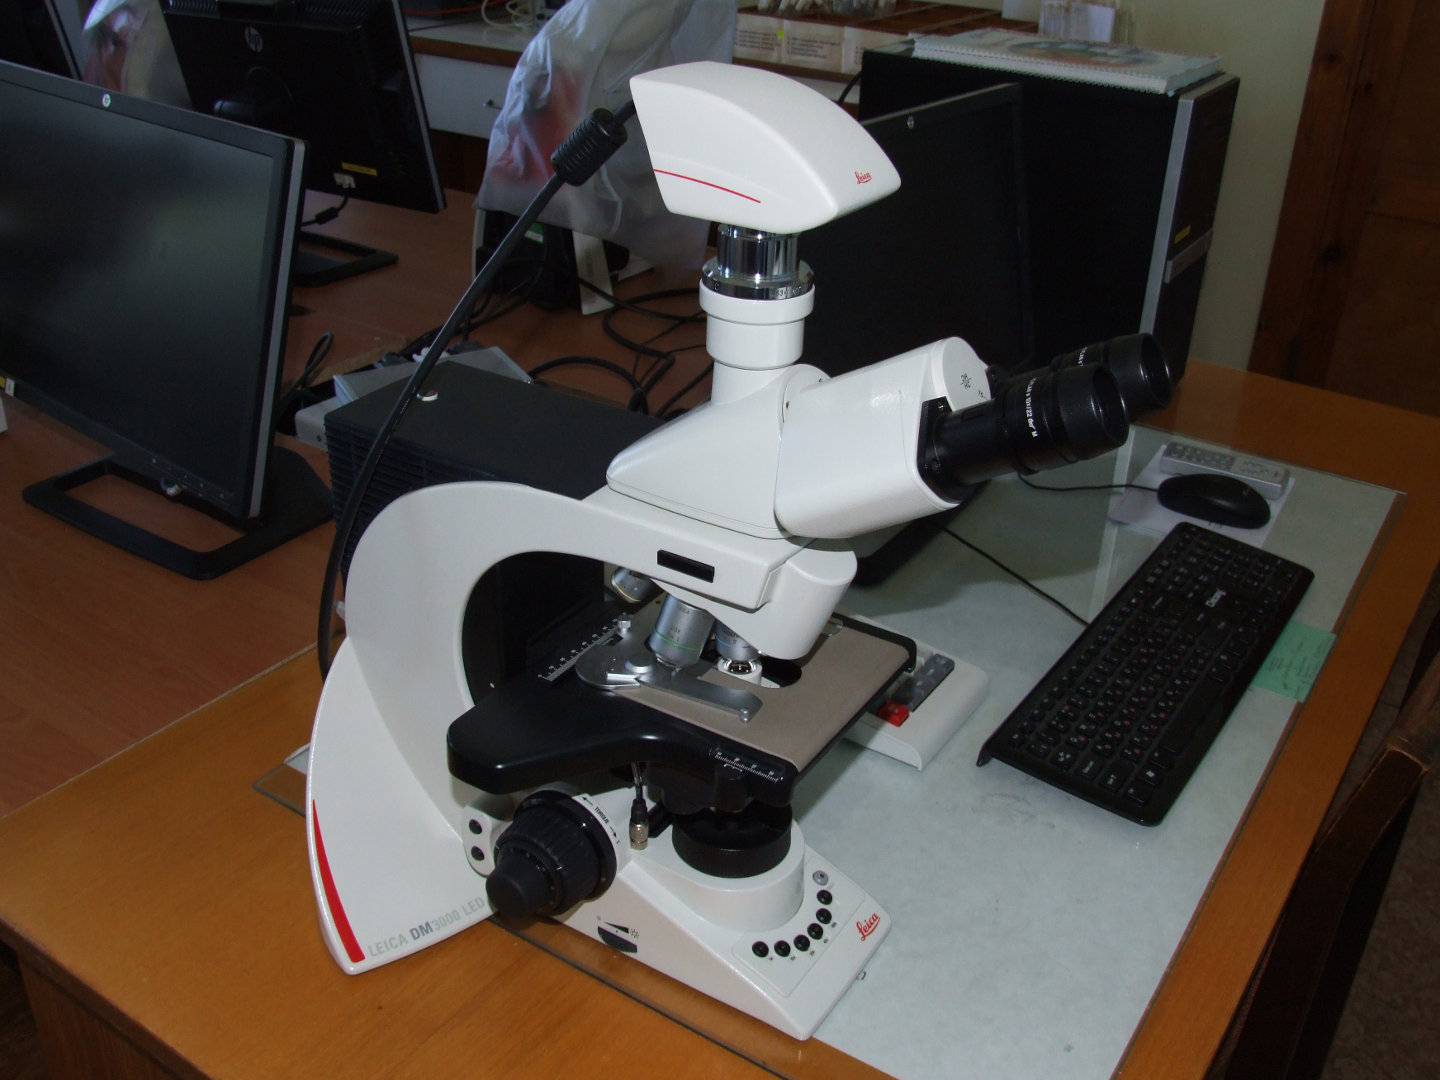 The Leica DM500 microscopes, Leica DFC290 Microscope Camera